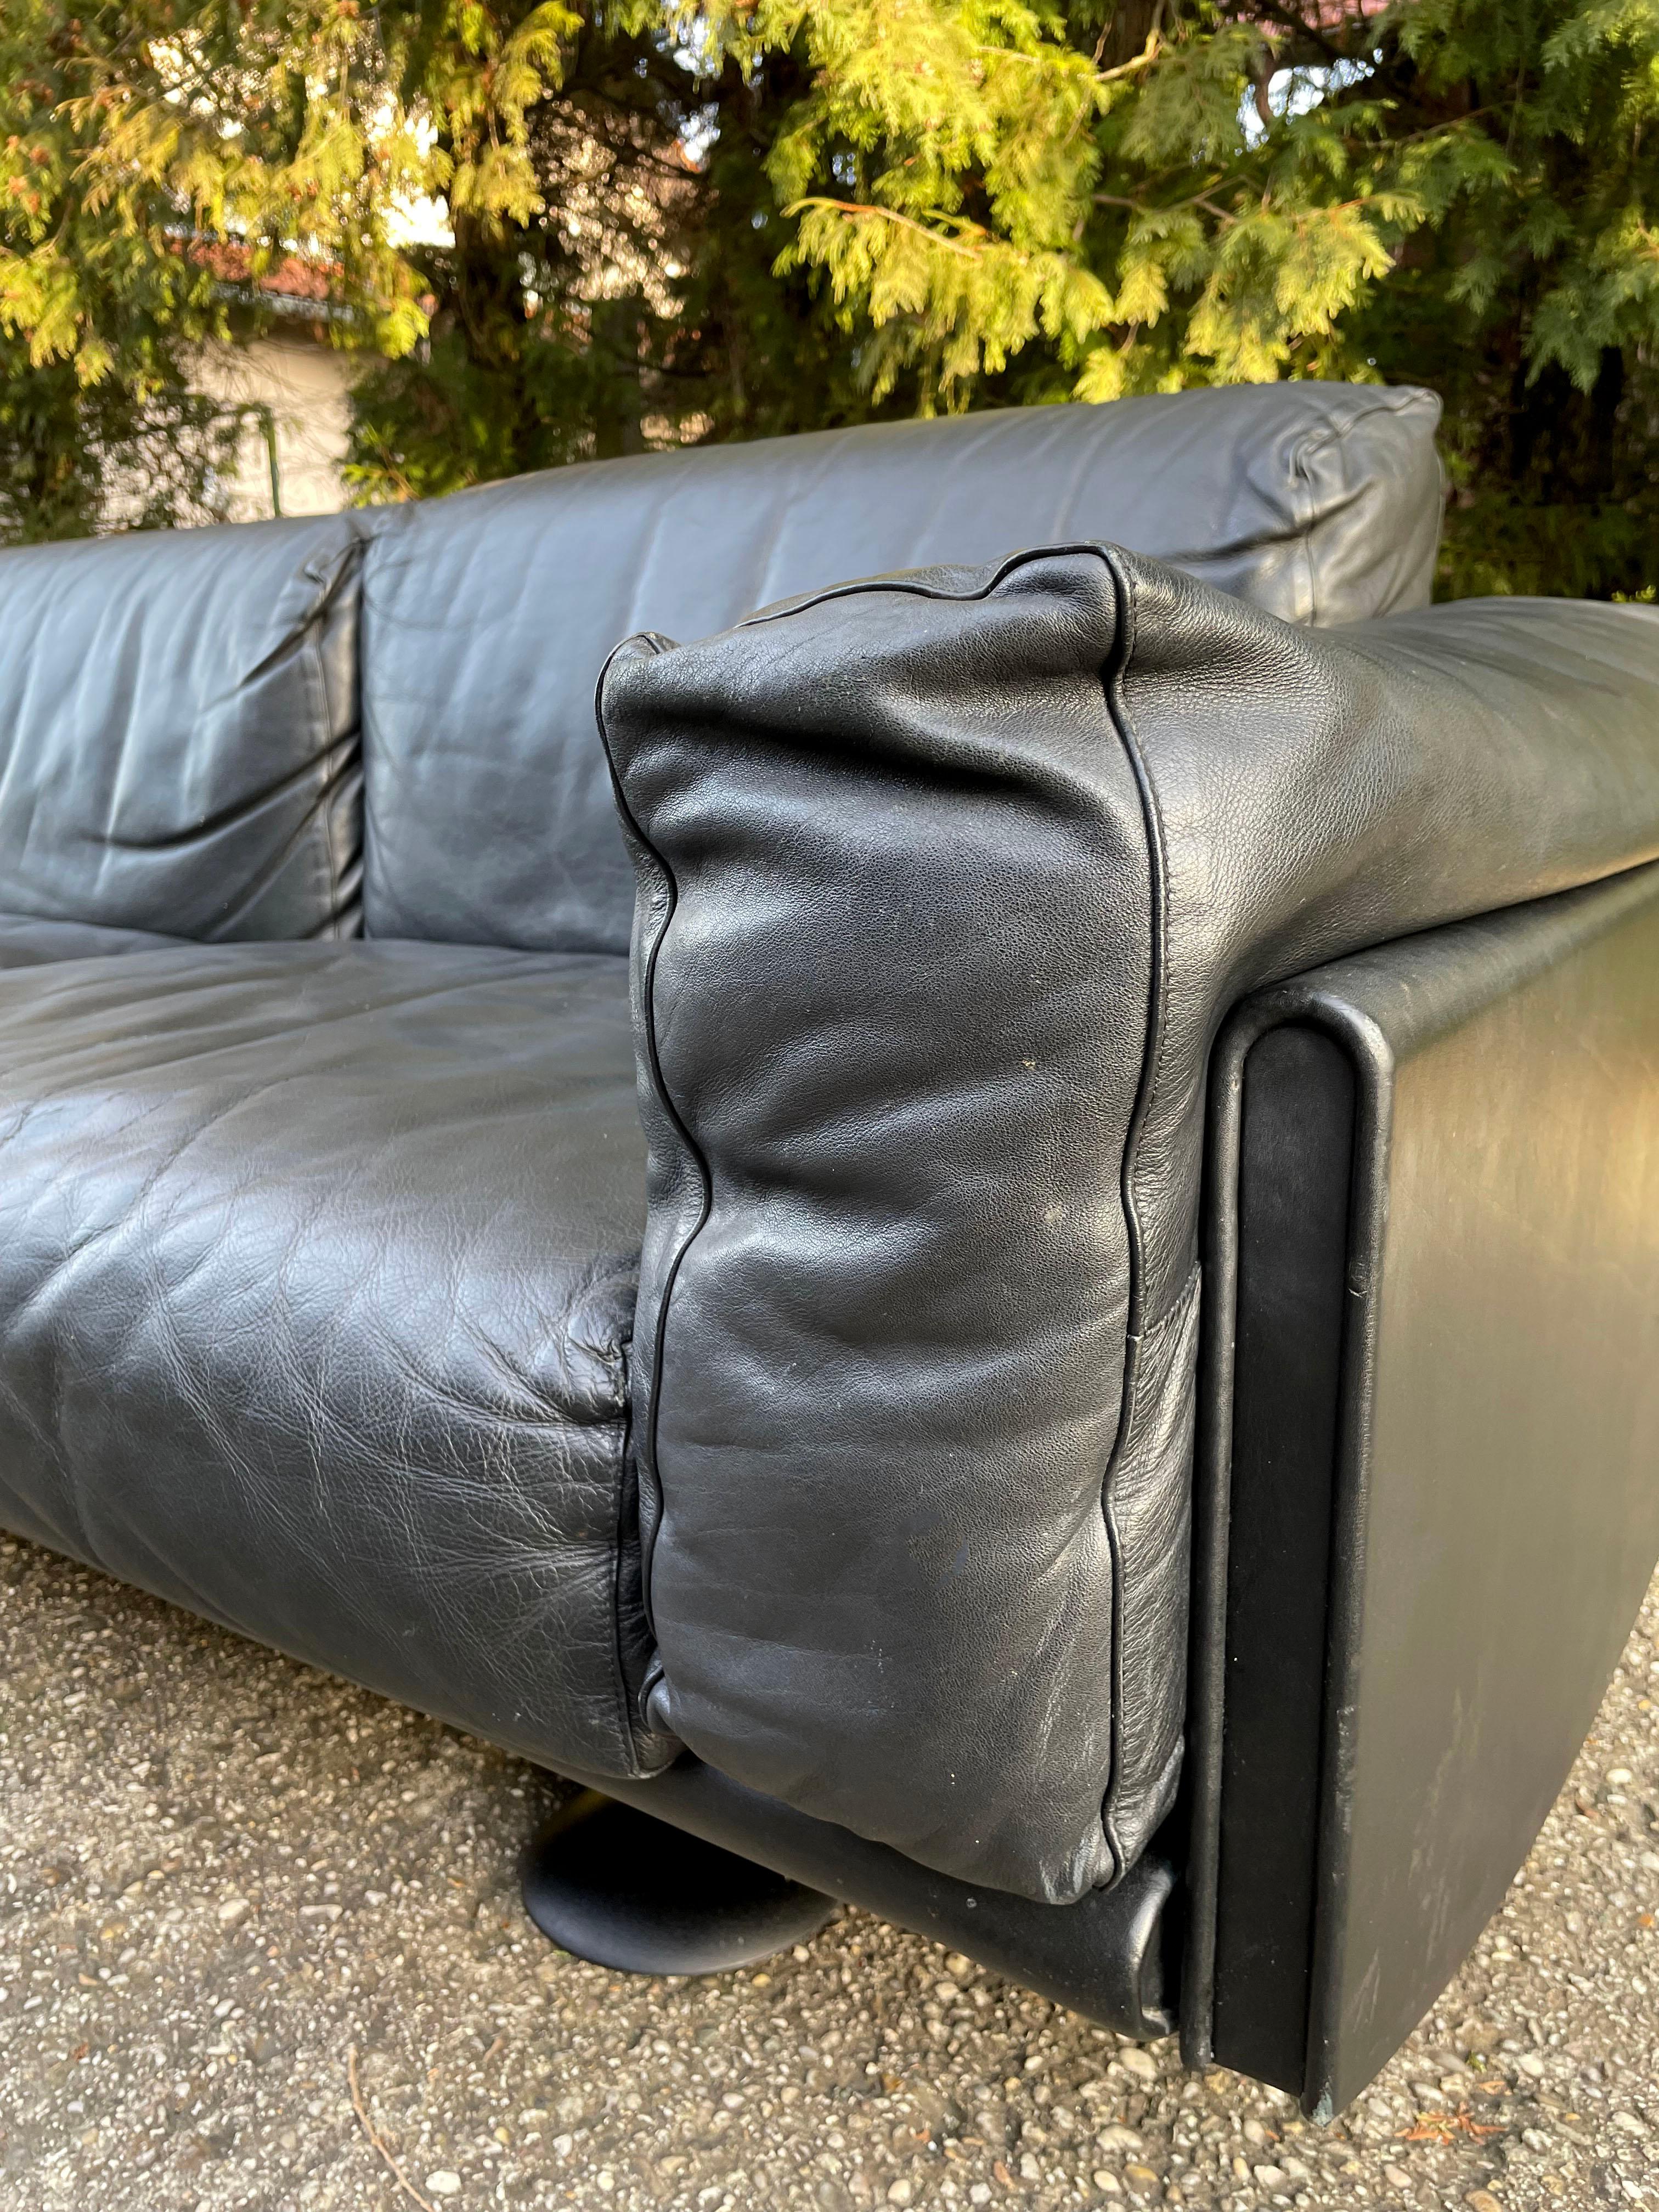 Late 20th Century Giulio Corner Black Leather Sofa by Afra & Tobia Scarpa for Meritalia, Italy 80s For Sale